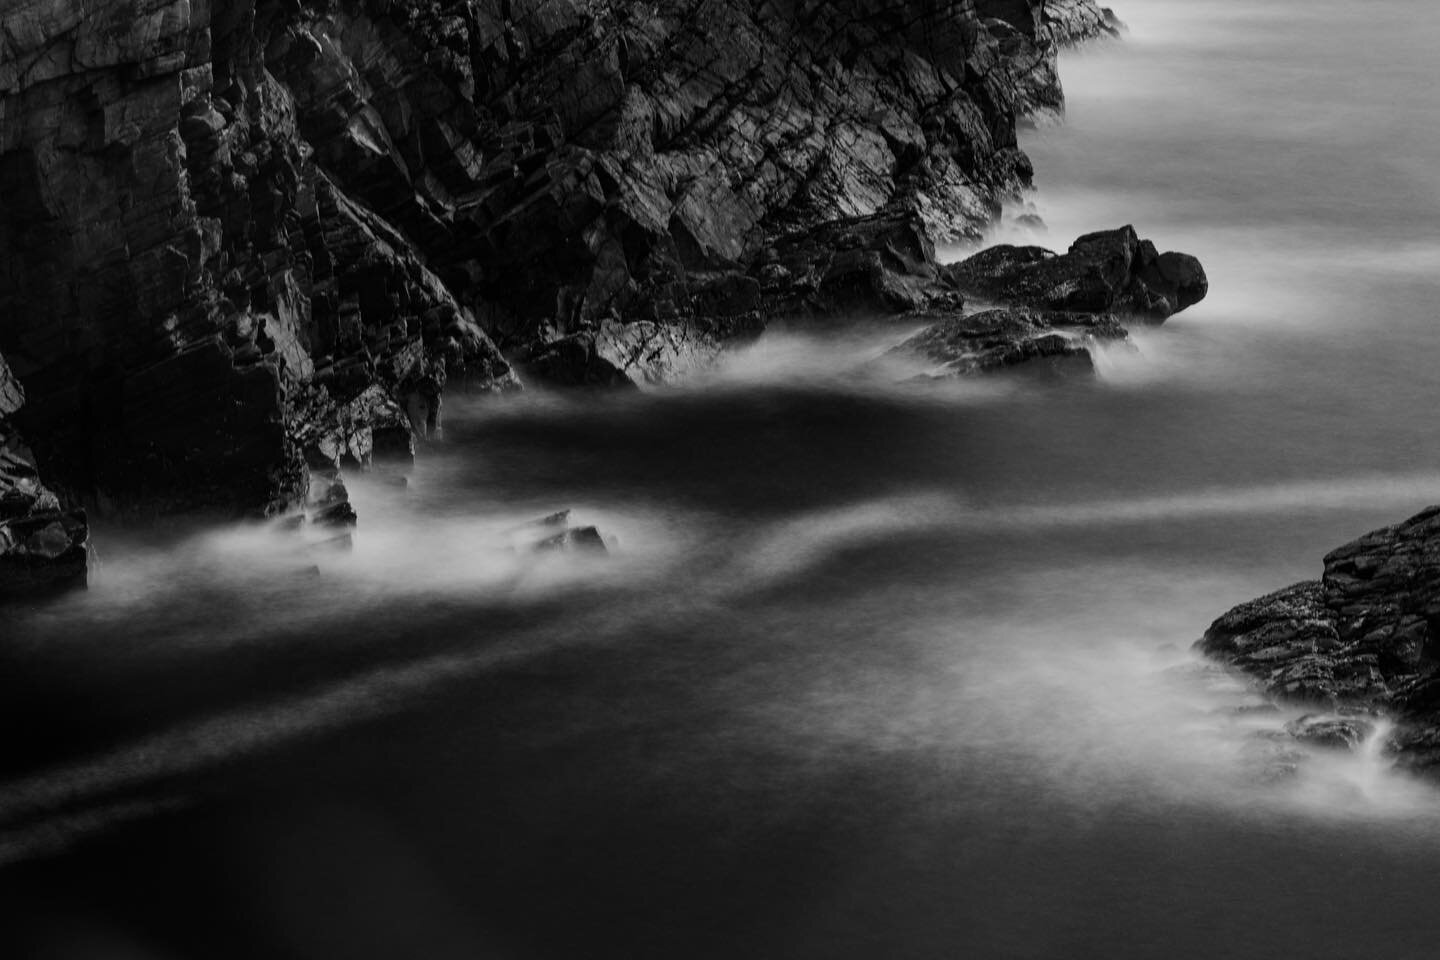 Seacoast near Sumburgh Head Shetland

#scotland #shetland #sumburghhead #hiking #travel #backpacking #solotraveller #canon #r5 #rfshooters  #travelphotography #seascape #hikingadventure #photography  #picoftheday #travel_photography #landscapephotogr